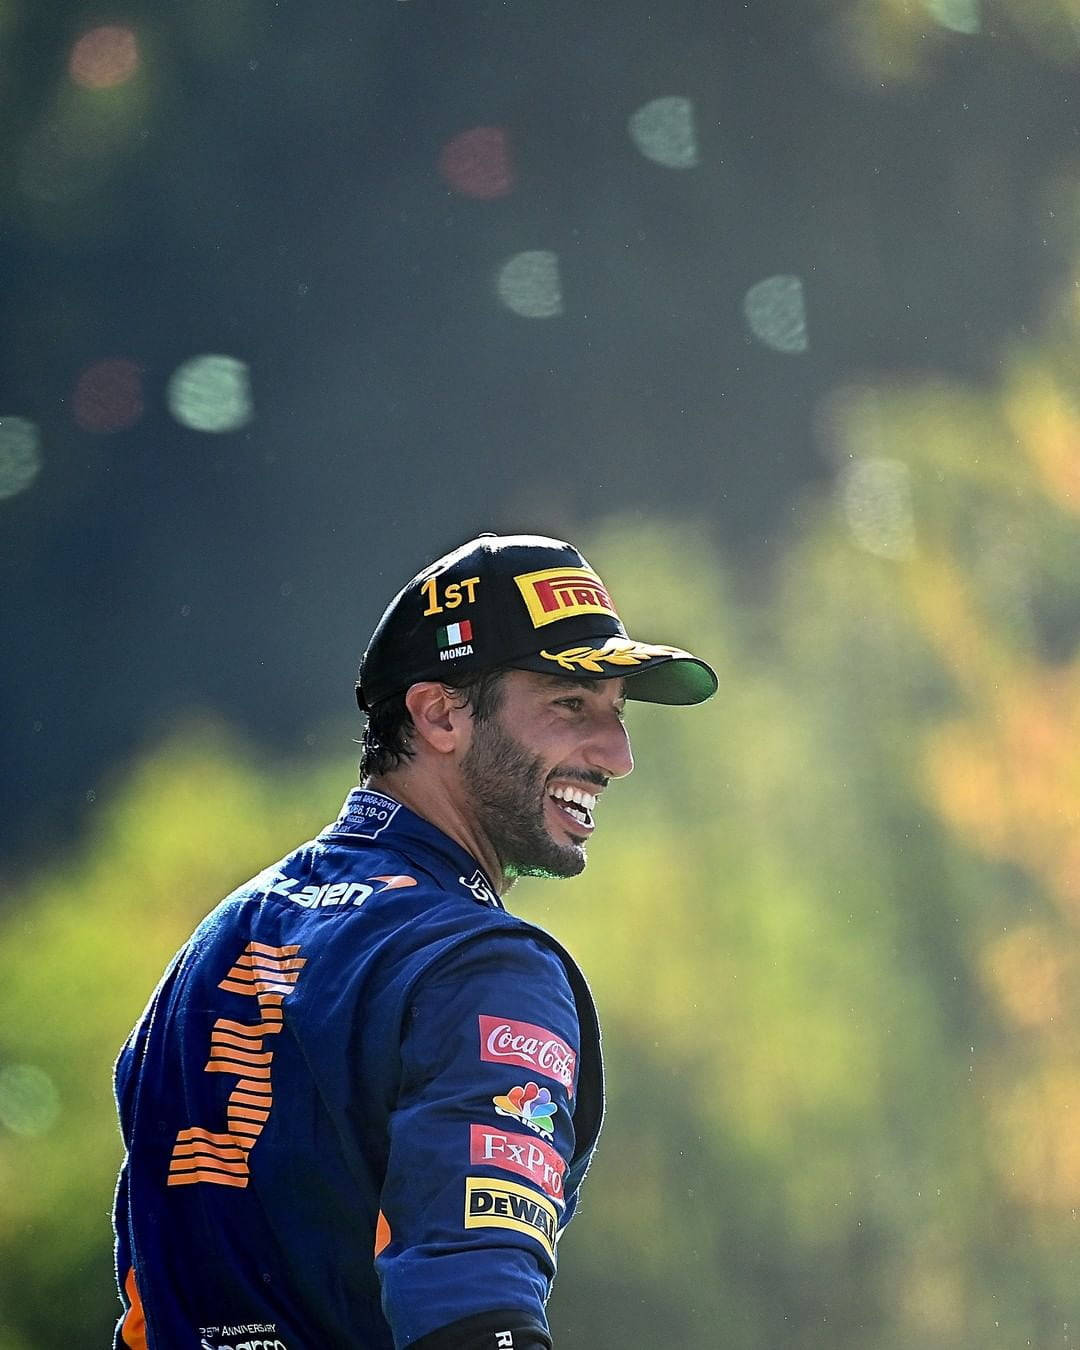 Daniel Ricciardo Gazes Off To The Side On The Race Track